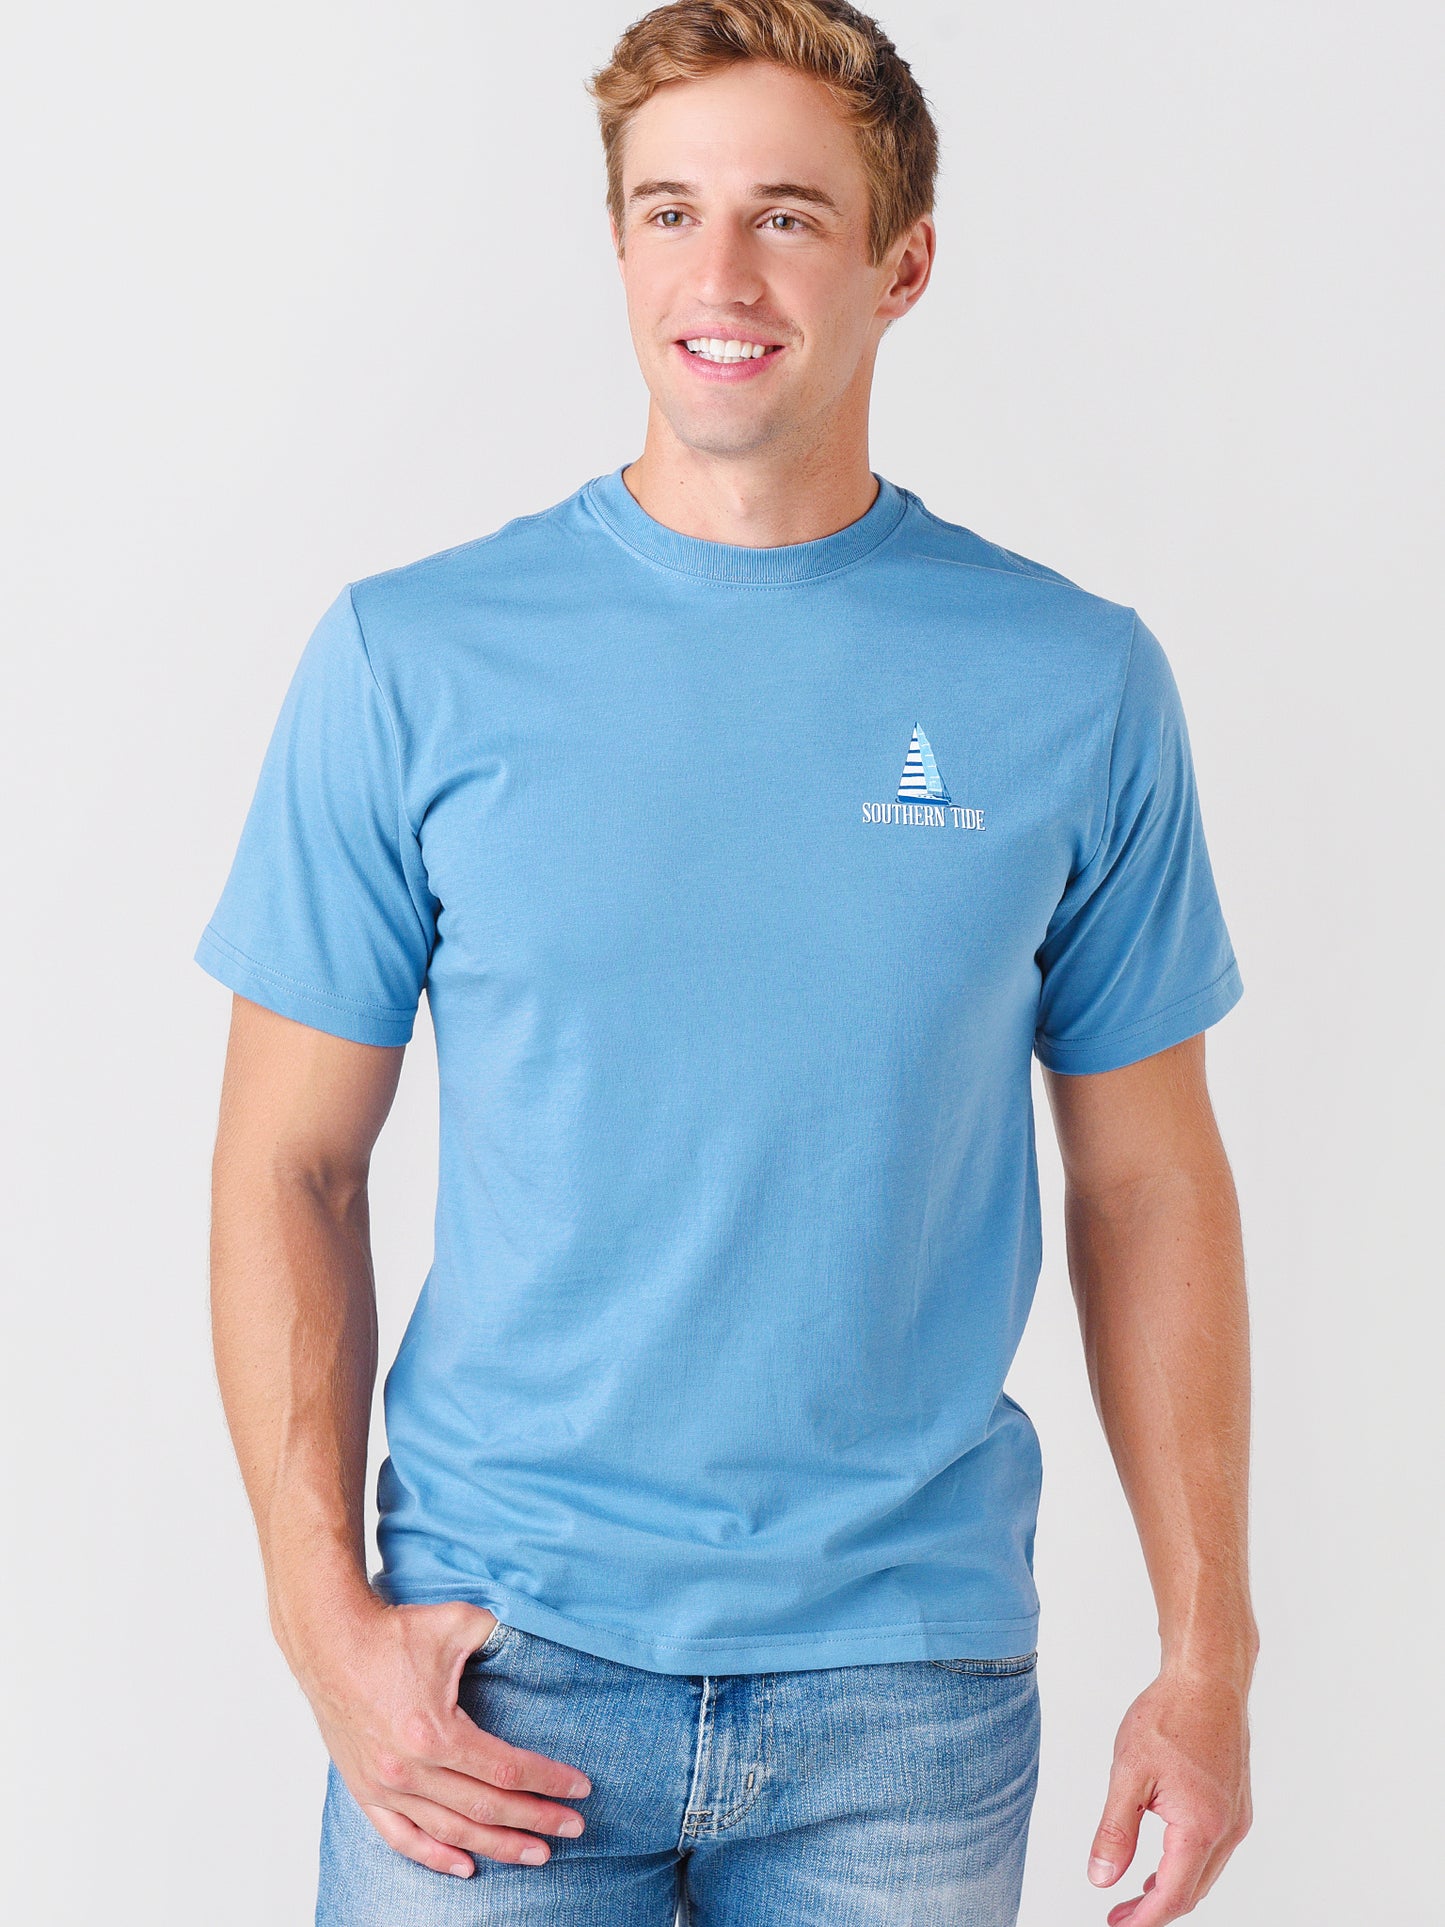 Southern Tide Men's Southern Series Sailing T-Shirt